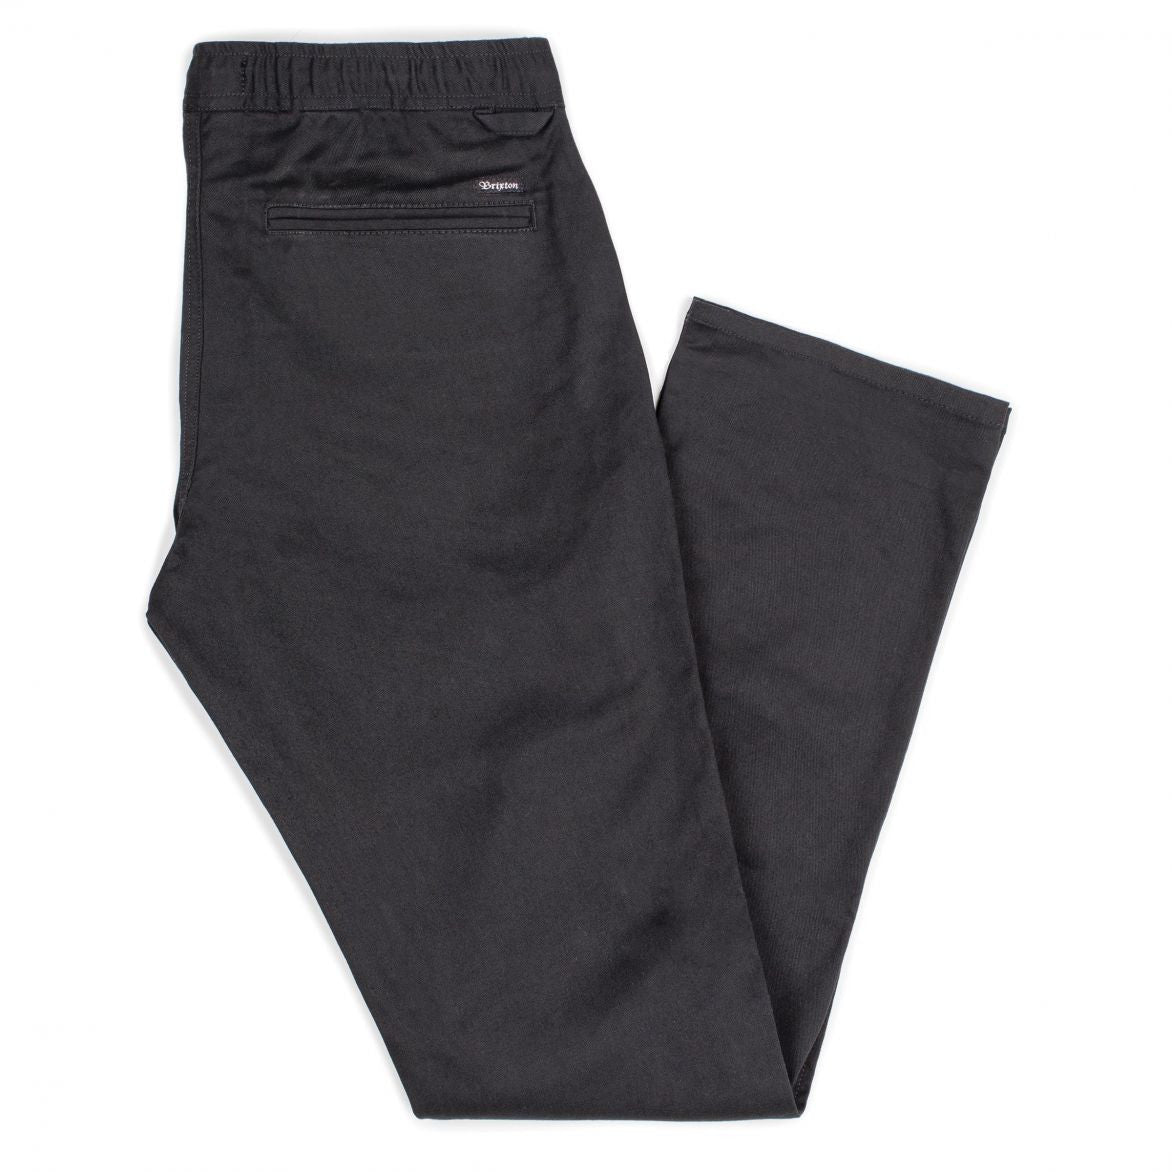 Brixton - Reserve Standard Fit Drawstring Men's Pants, Black - The Giant Peach